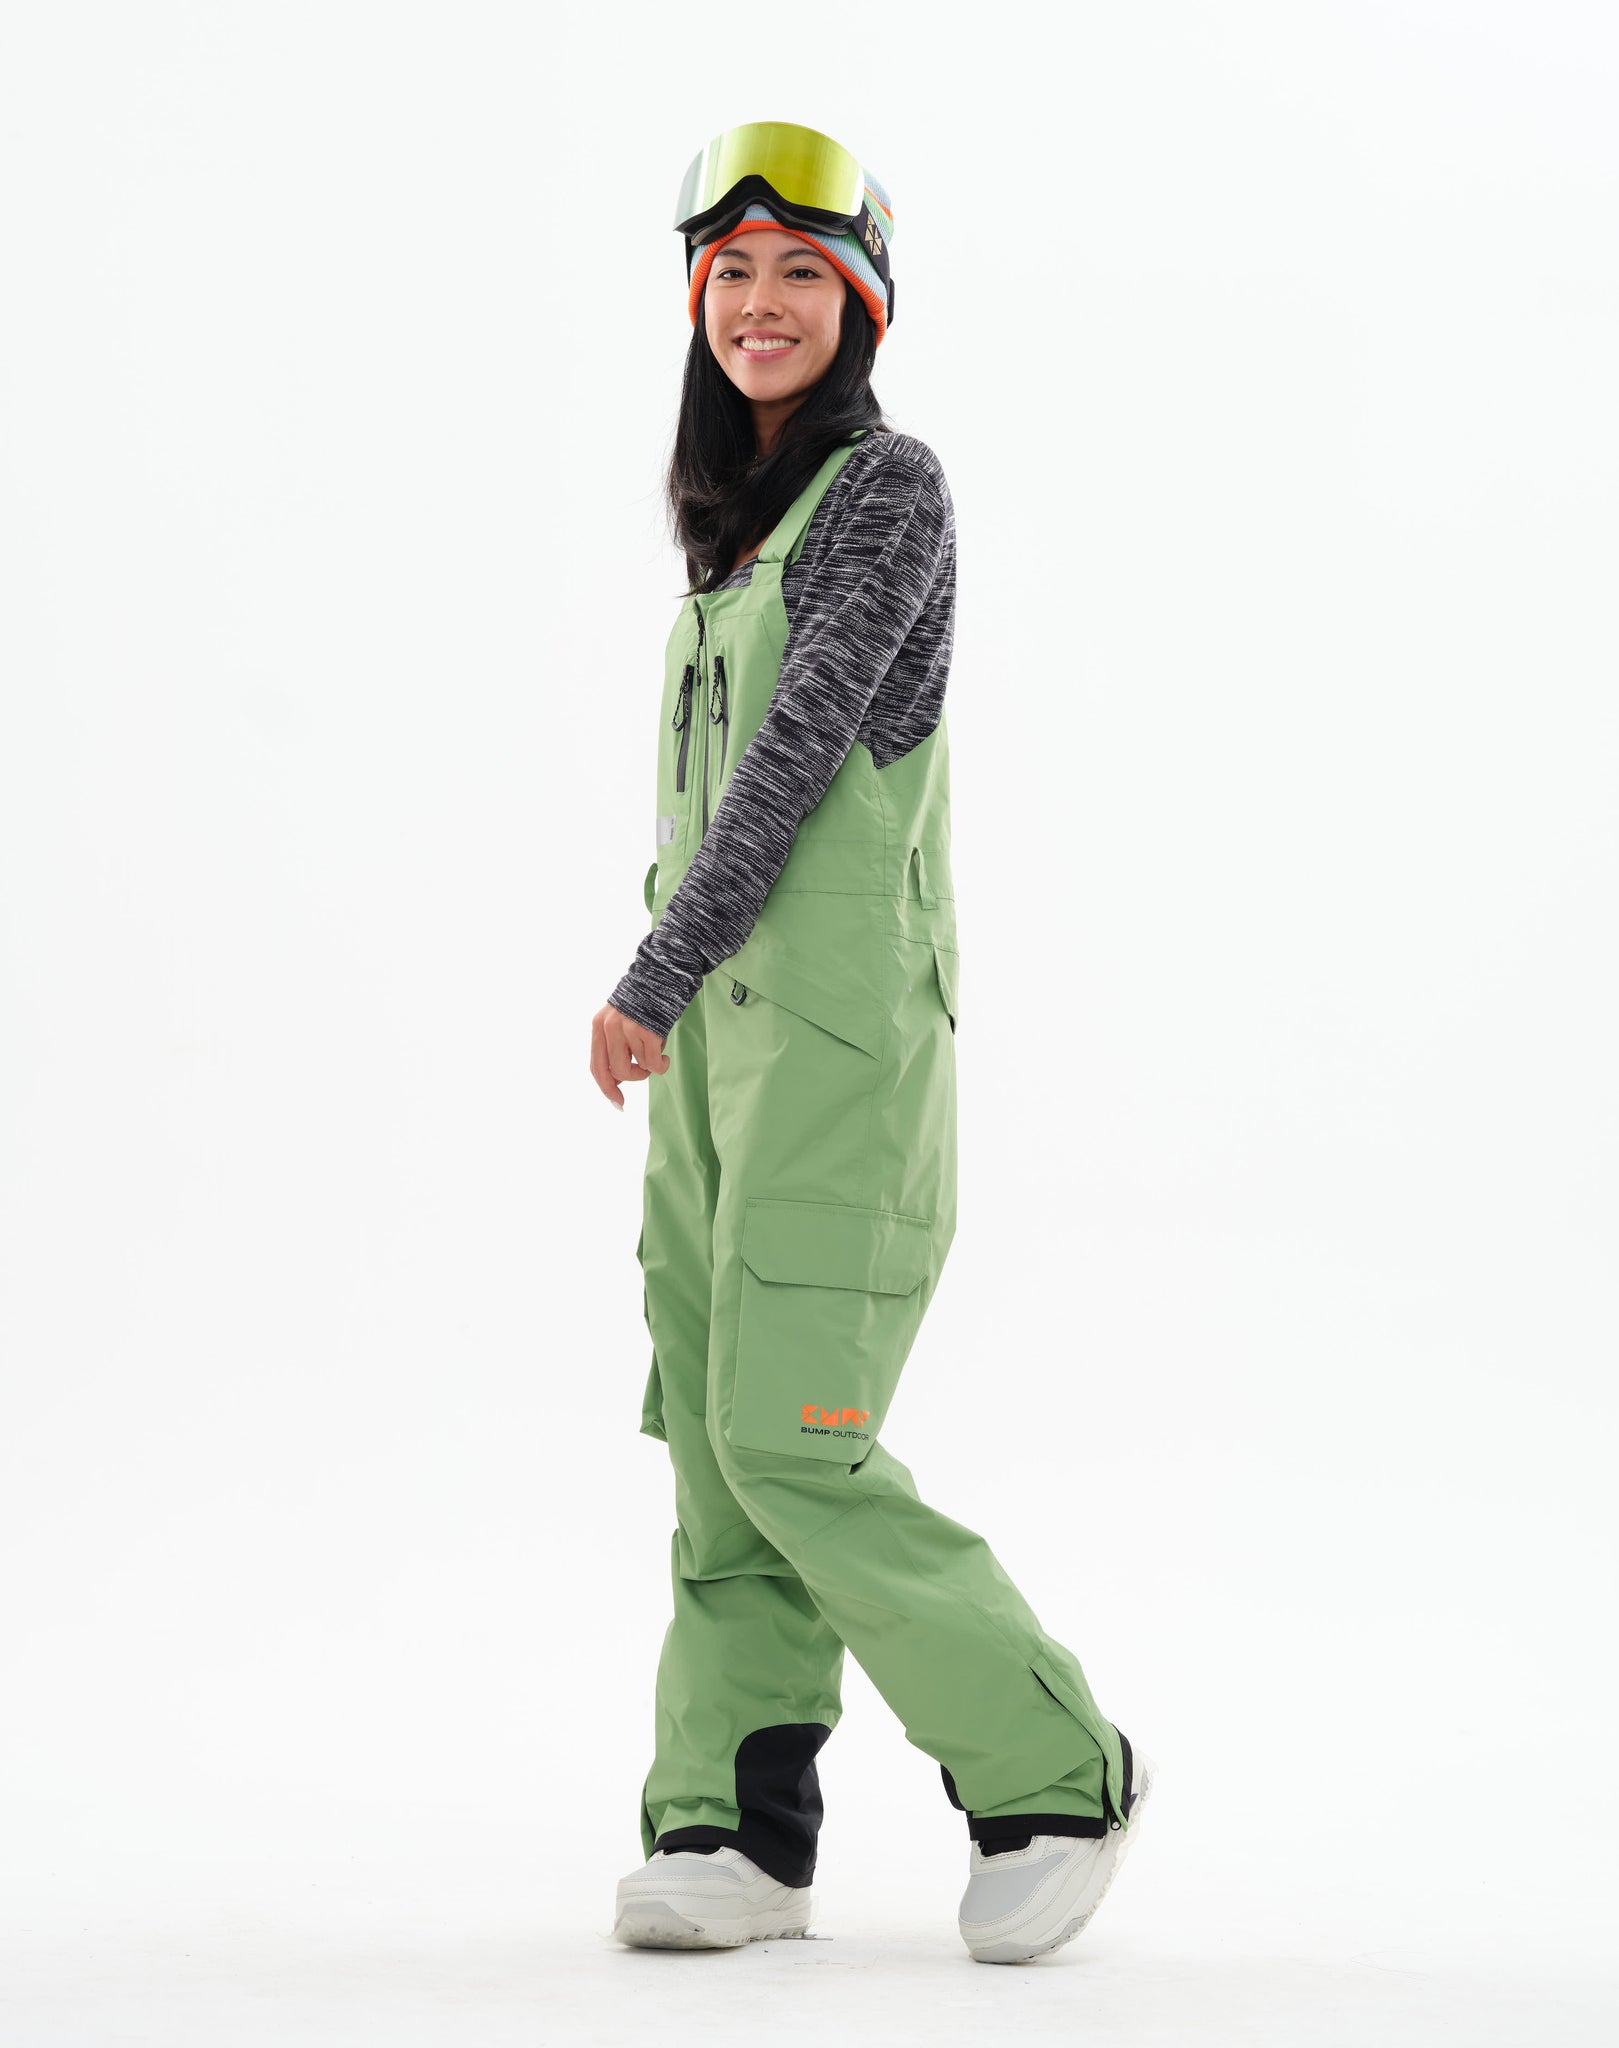 Iconic 23 Ski/Snowboard Bib Pants Women Absinthe Green